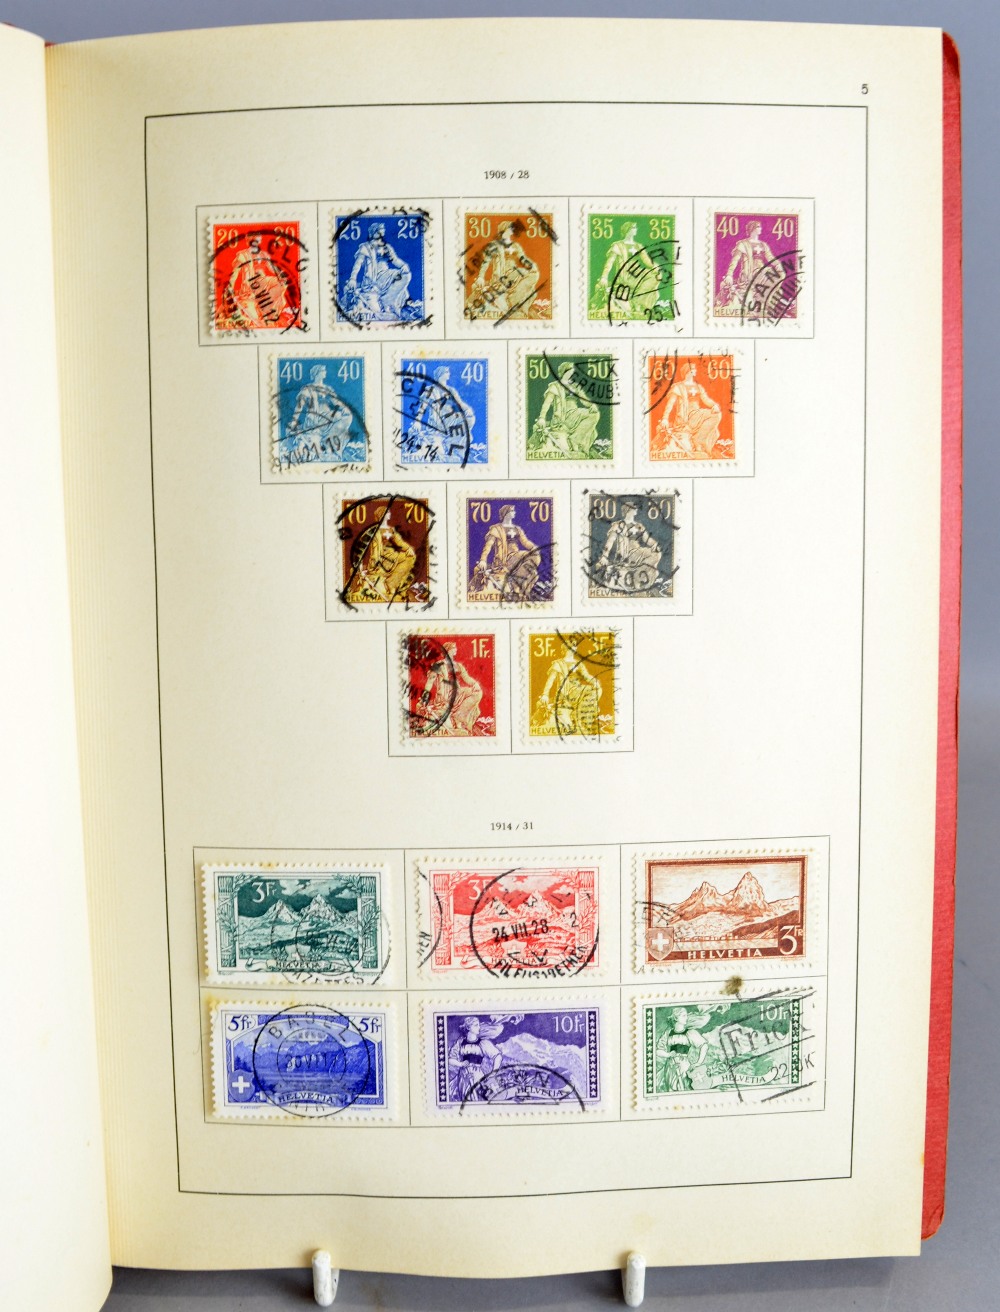 Meine Briefmarken mes timbres-poste, album of Switzerland stamps in special album, very nice clean